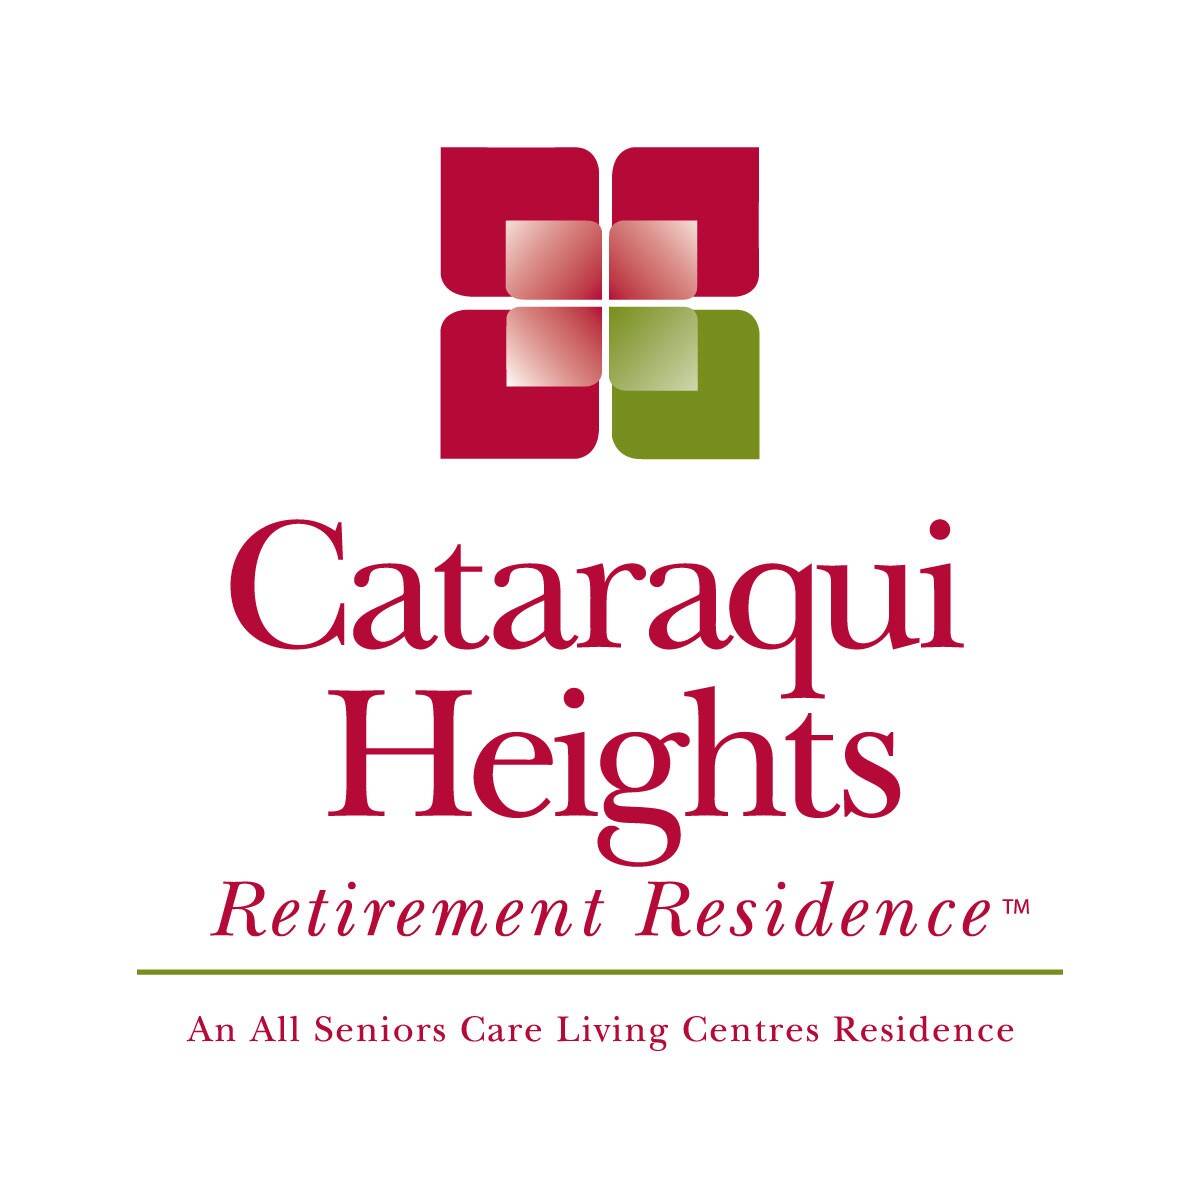 All Seniors Care Living Centres Residence